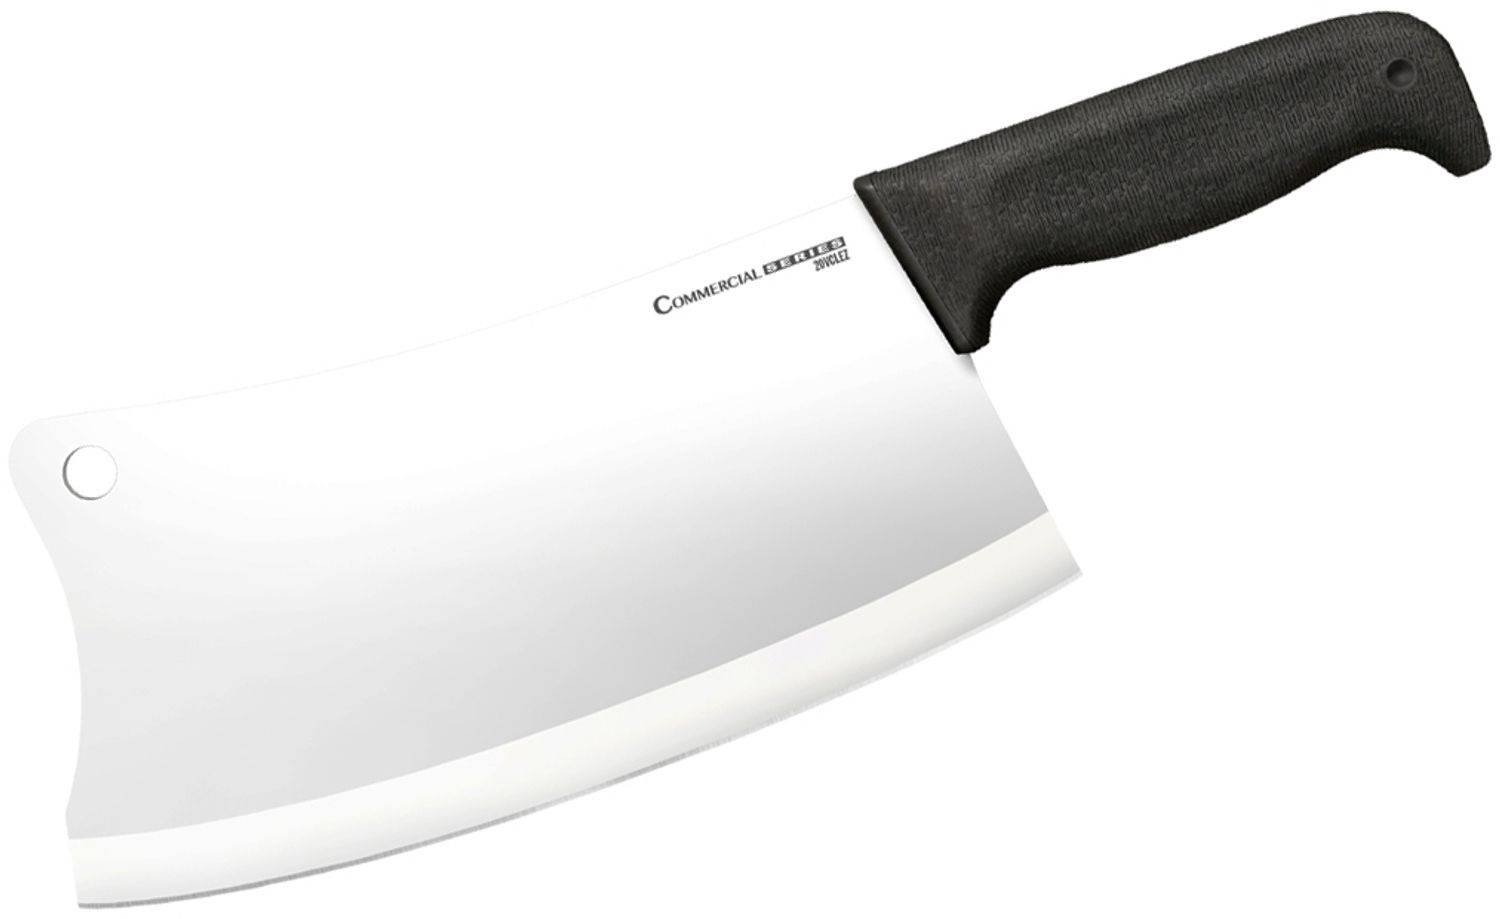 Shun DM0712 Classic Vegetable Cleaver 7.75 Blade, Pakkawood Handle -  KnifeCenter